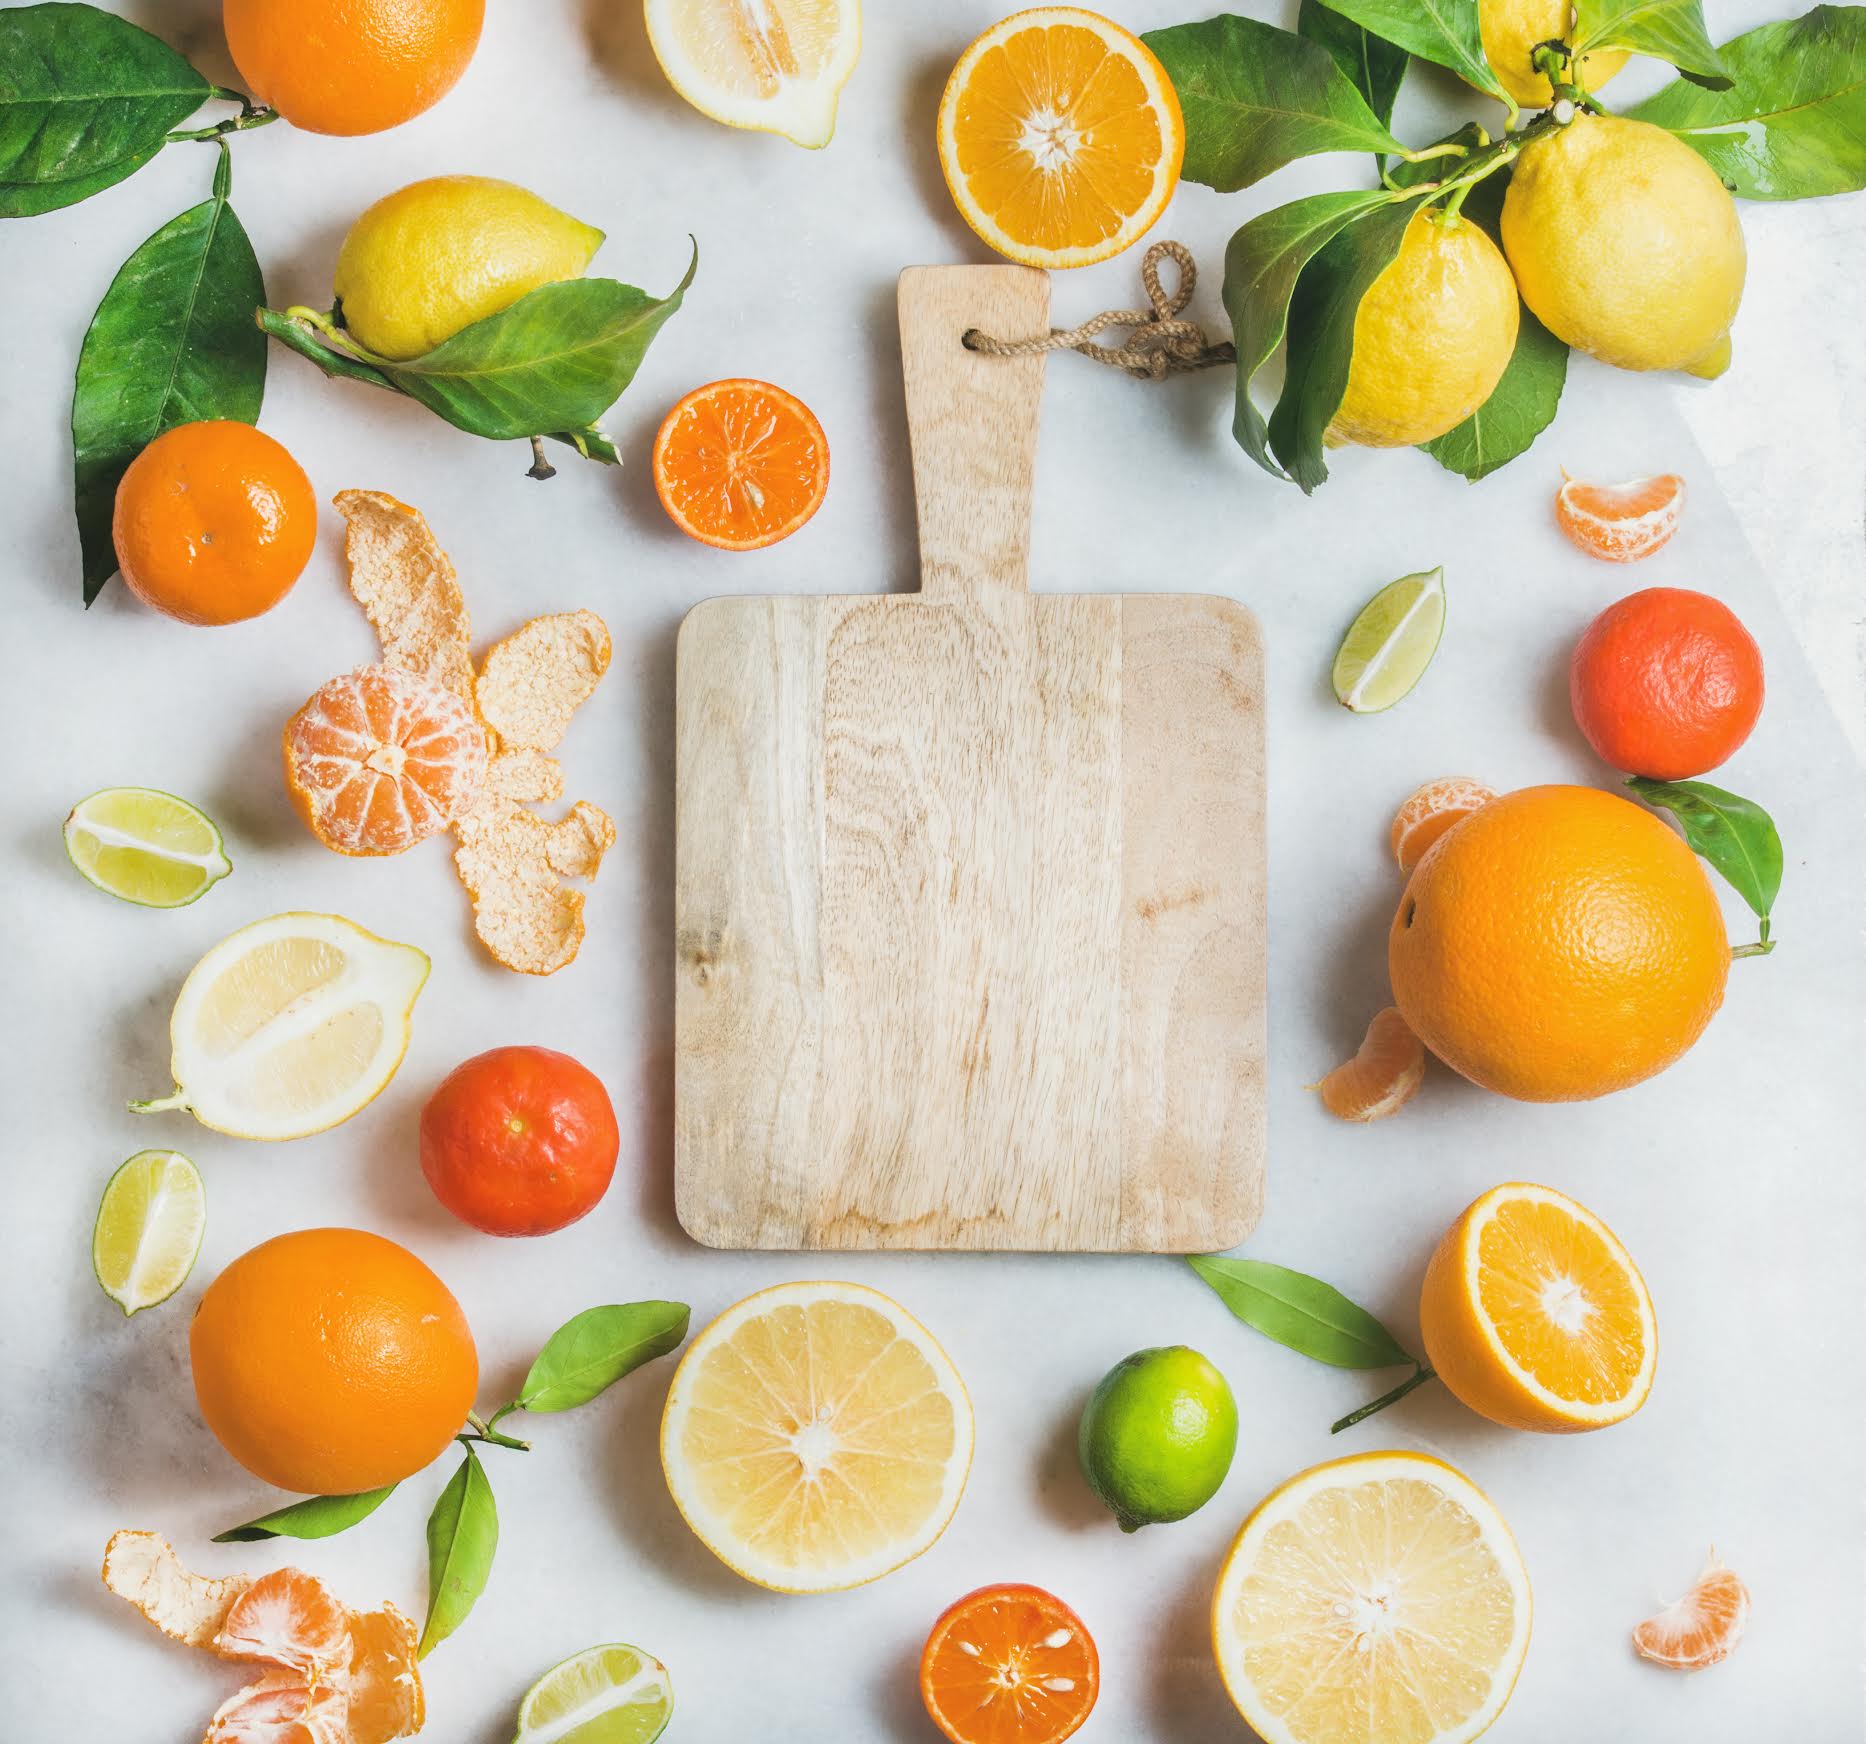 5 Reasons Gym-Goers Should Eat Citrus Fruits